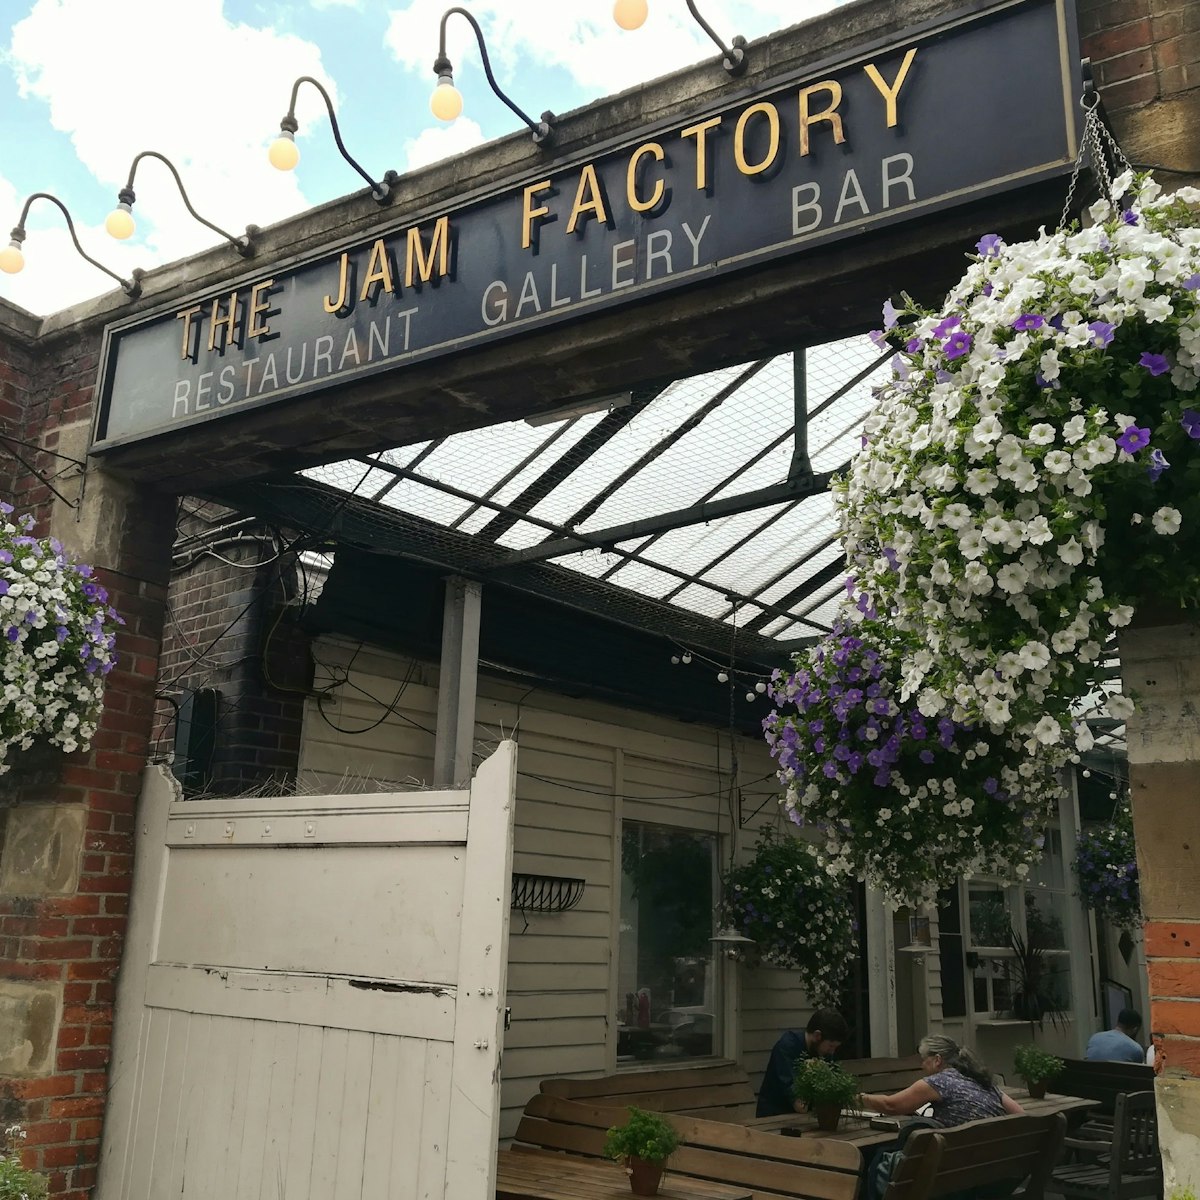 The entrance to Jam Factory, through the patio